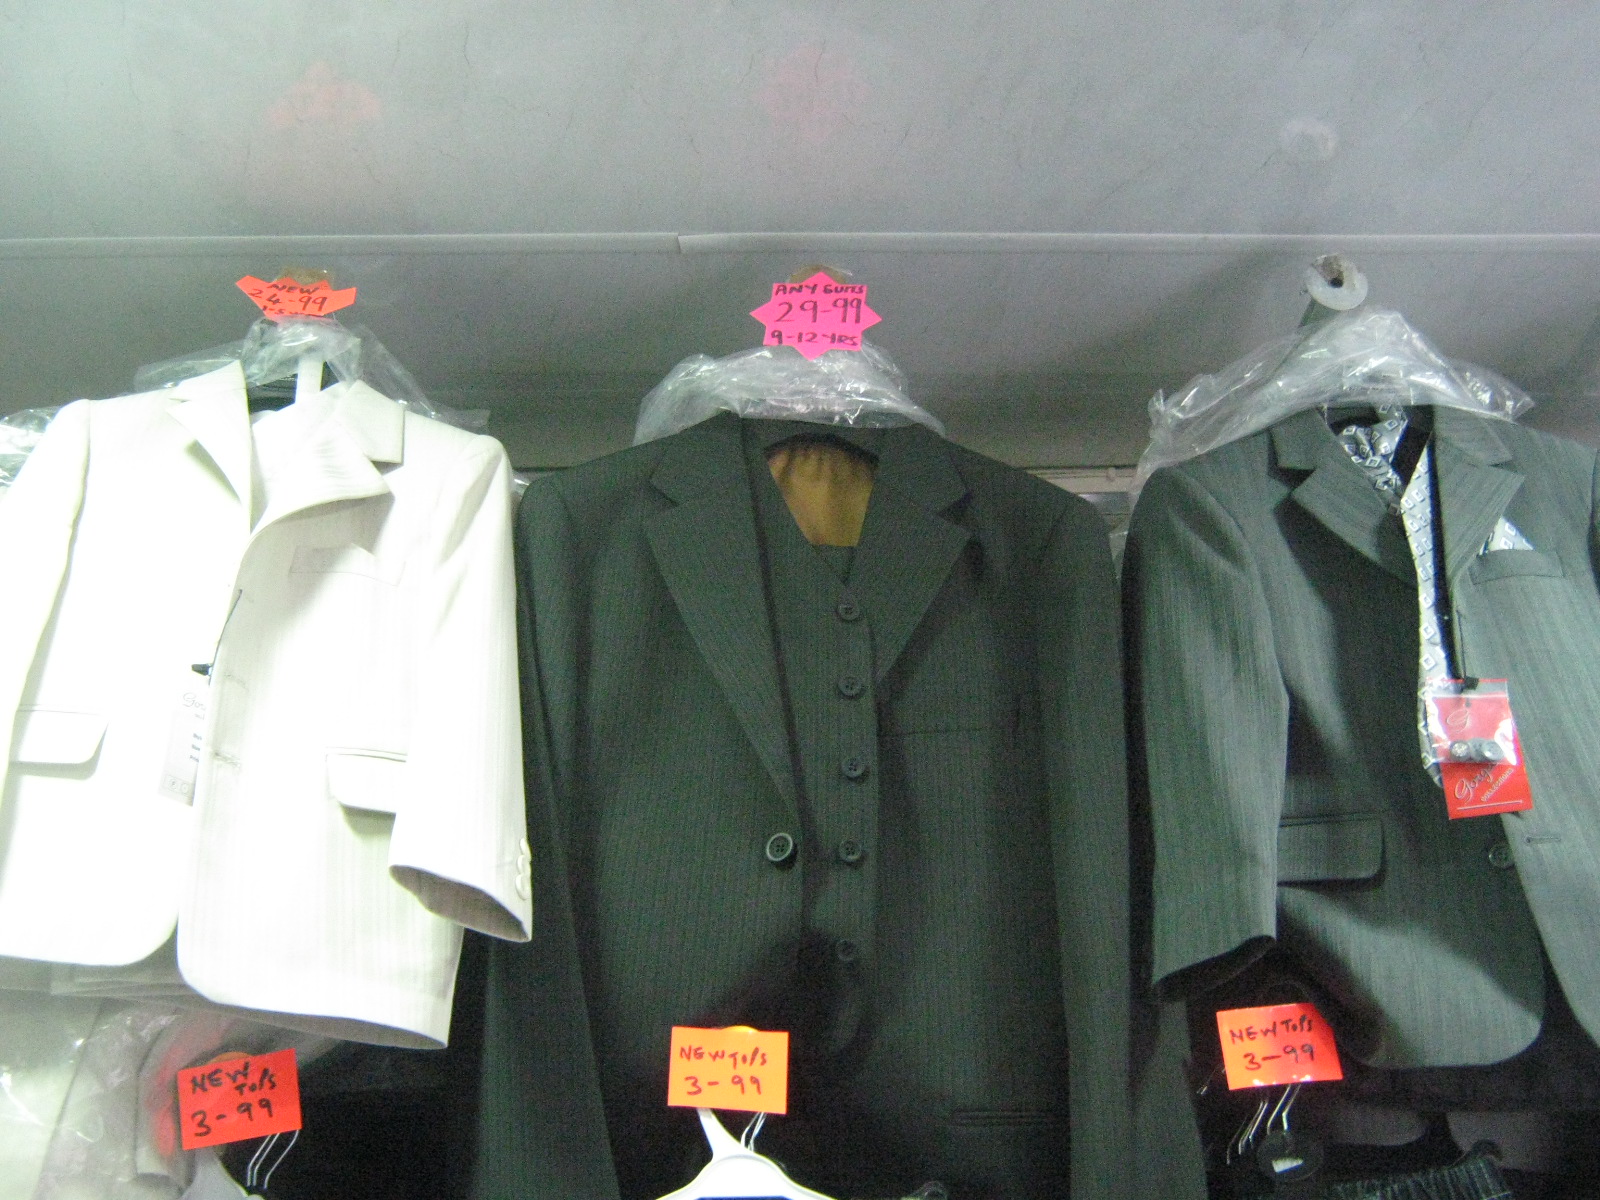 Boys suits & formal wear for children. Children's clothes shop Leicester UK